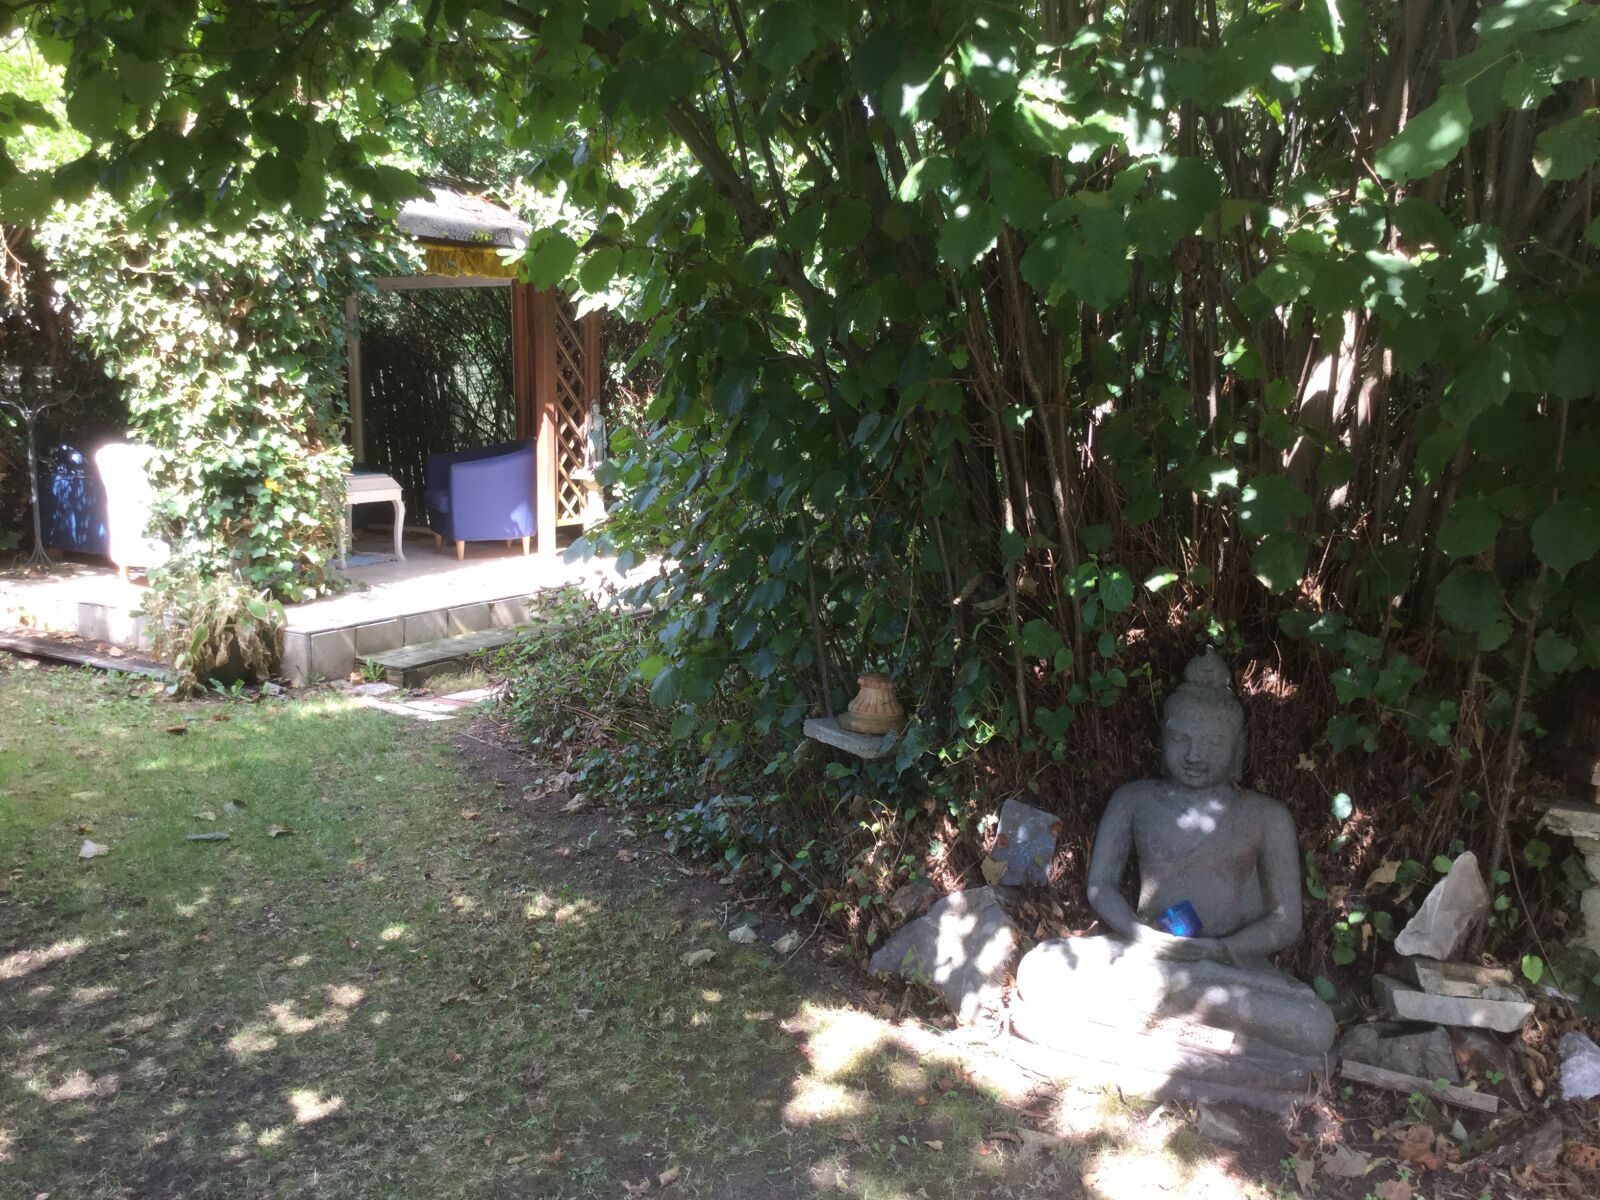 iPad Air 2 back camera 3.3mm f/2.4 sample photo. Garden, buddha, relaxation photography